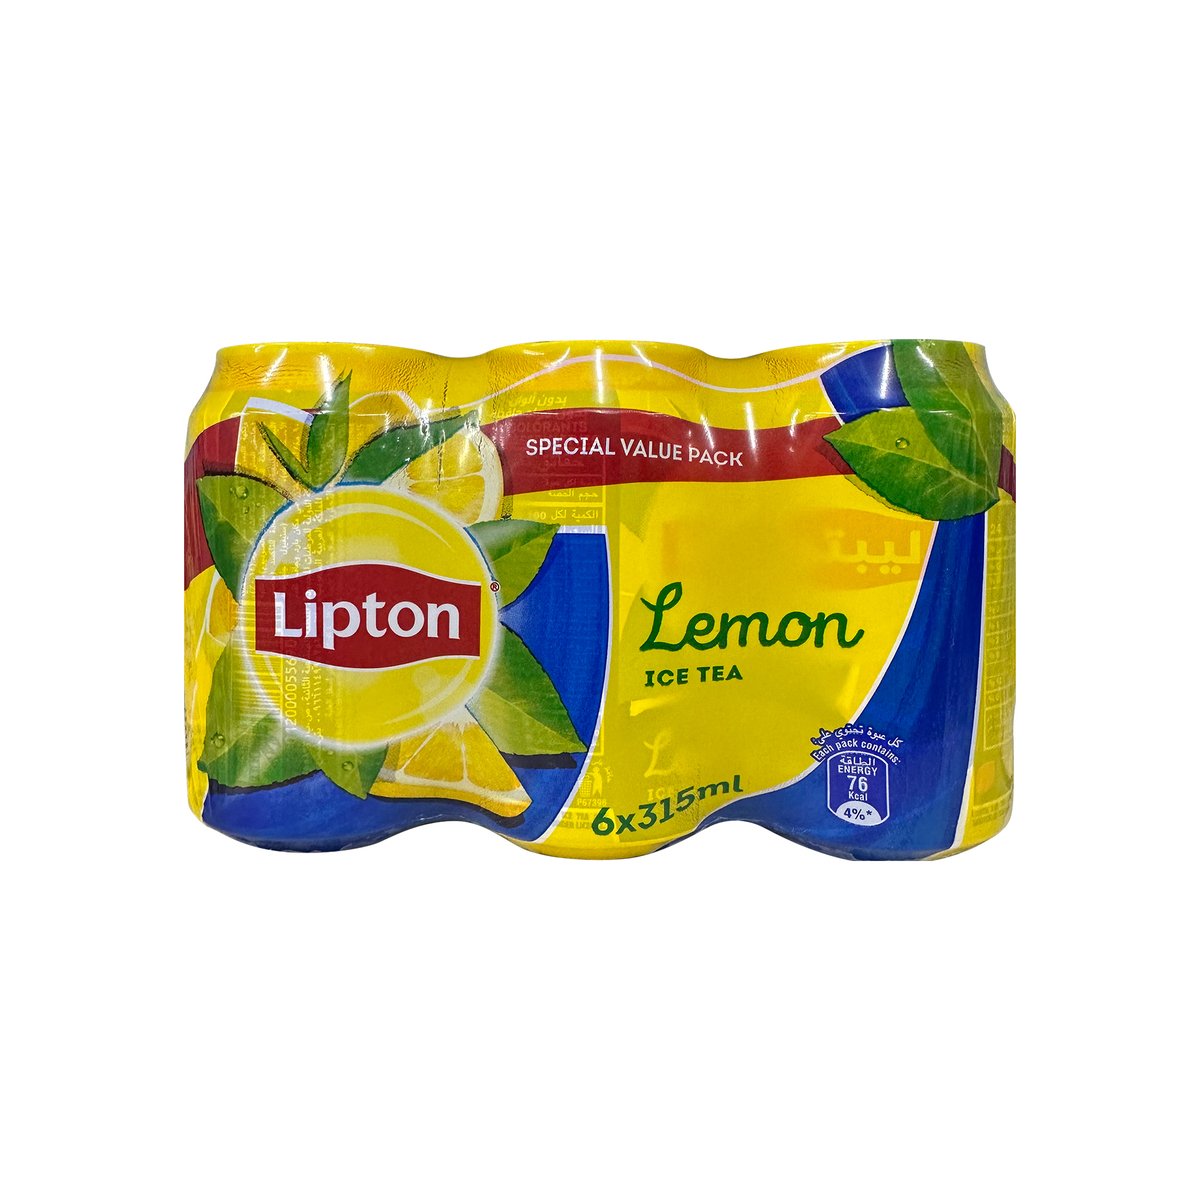 Lipton Lemon Ice Tea 6 x 315 ml